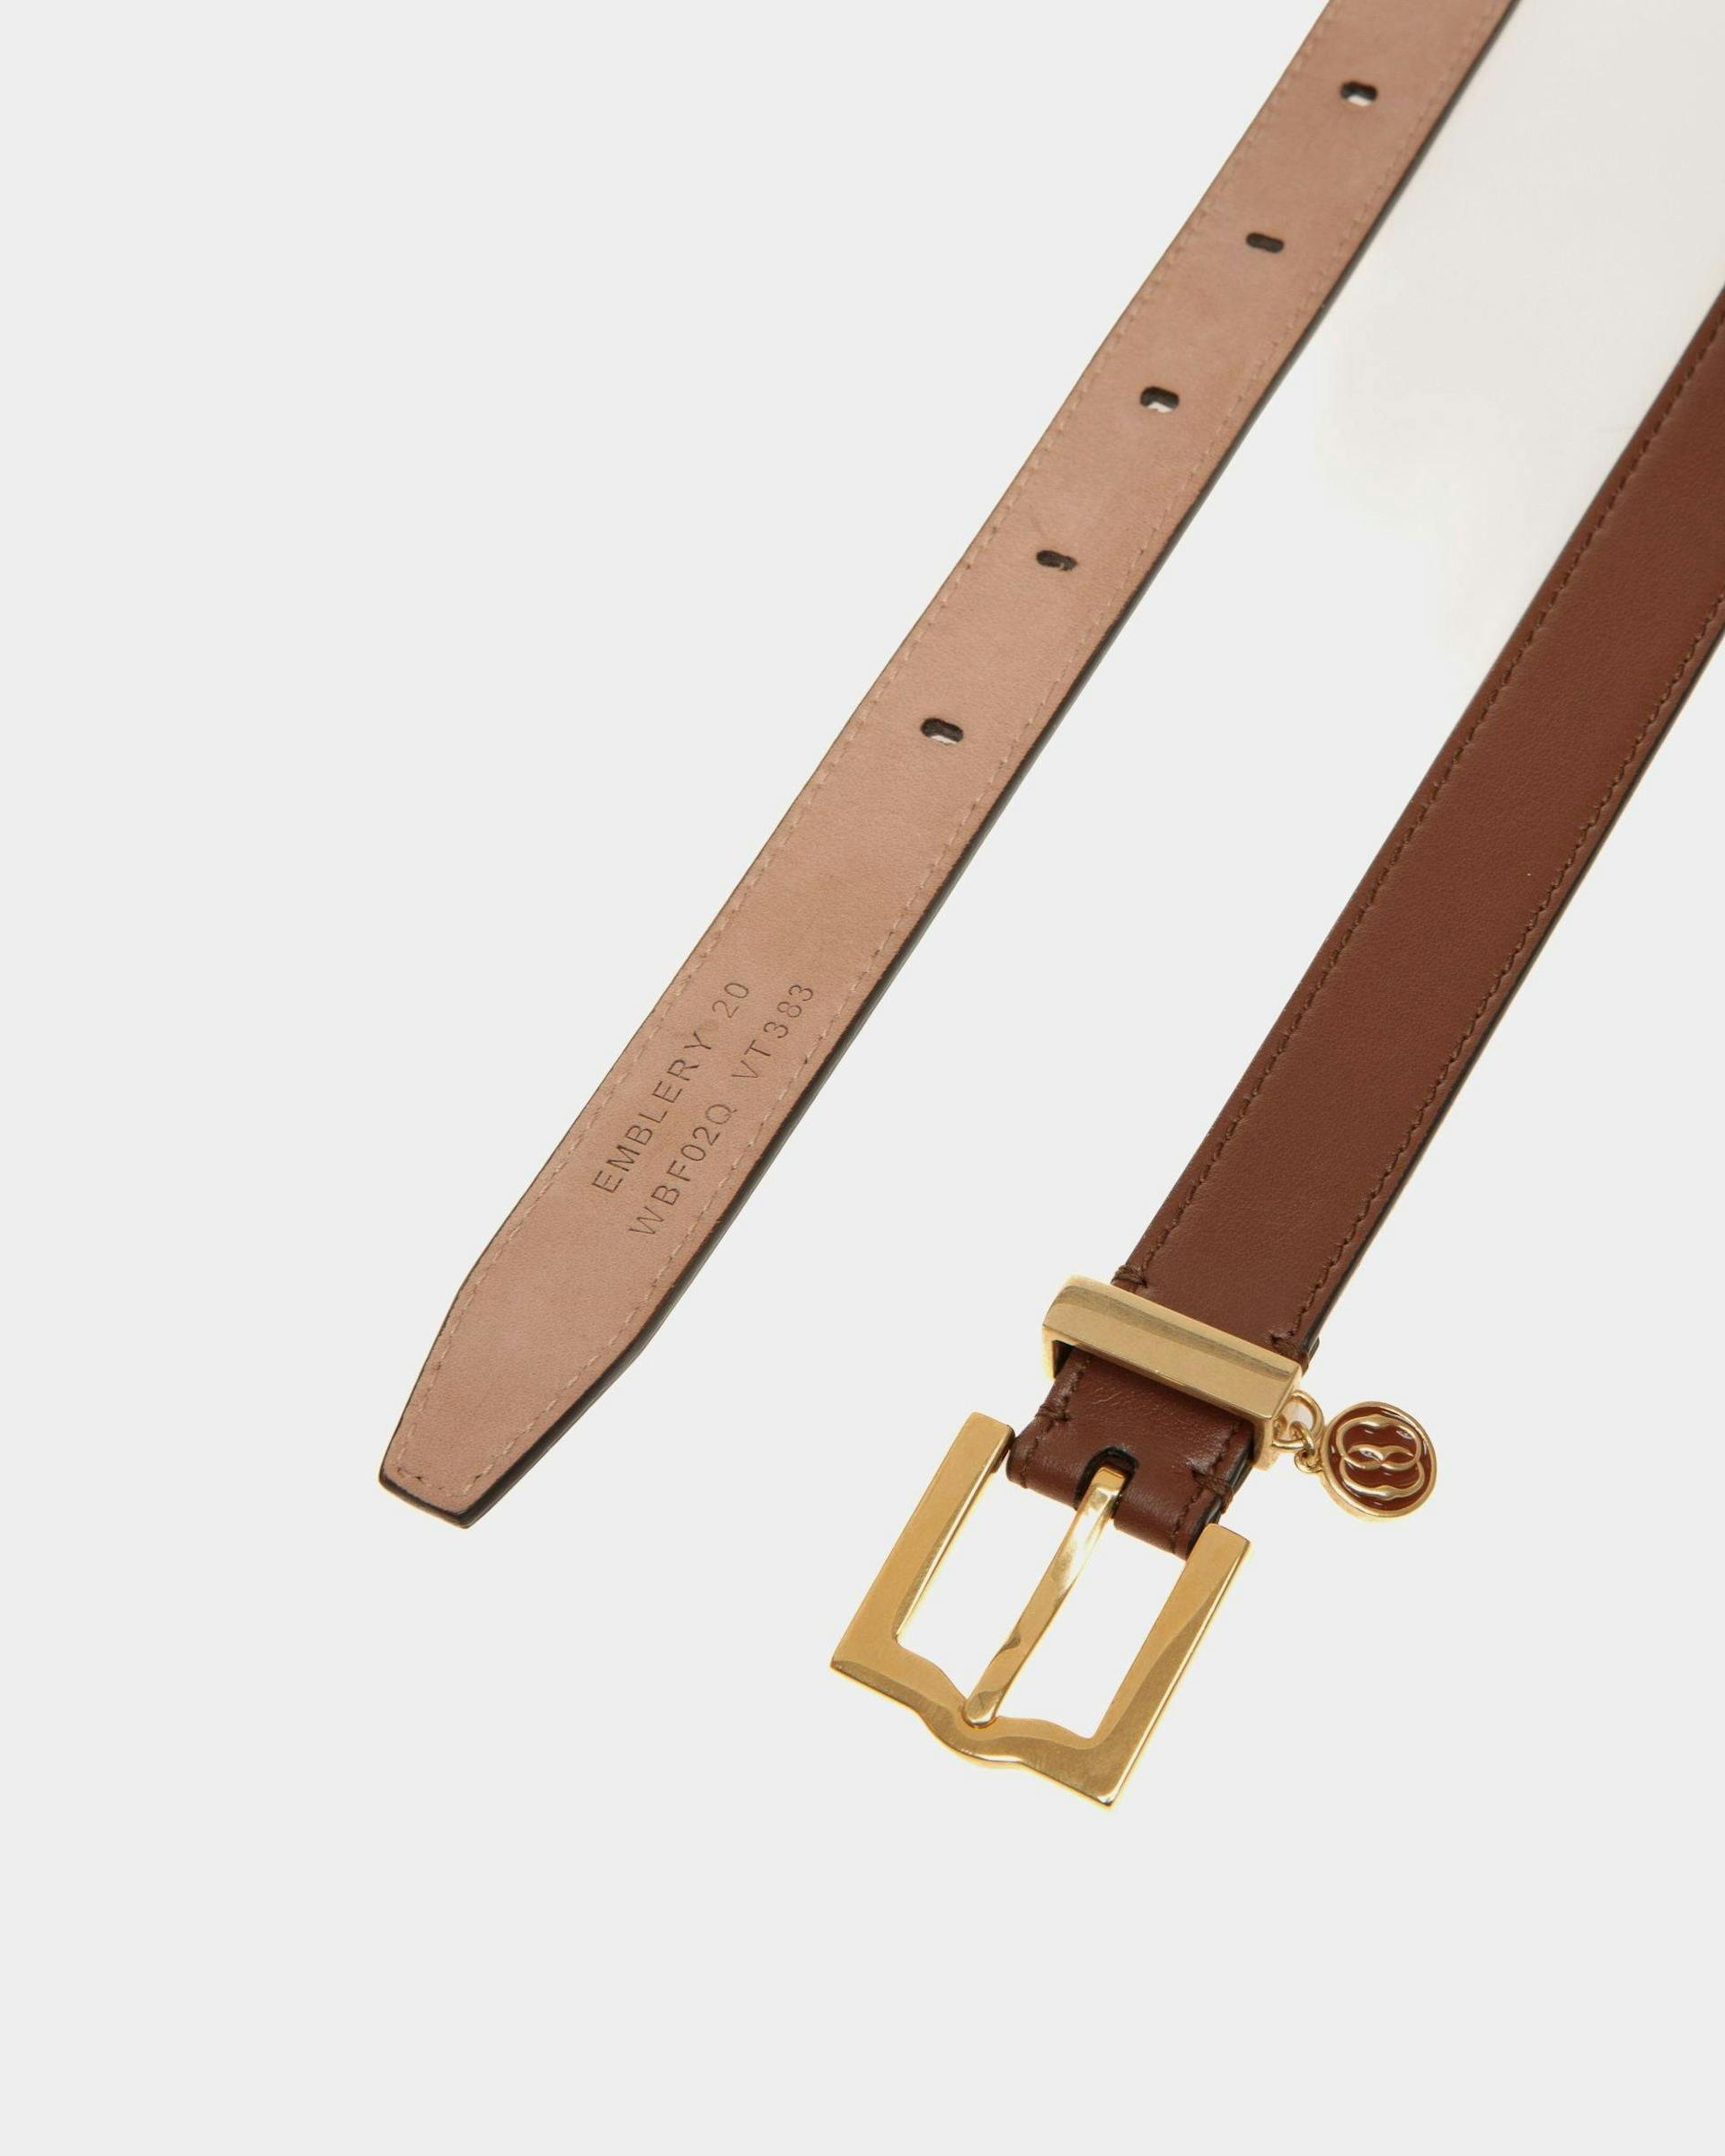 Women's Emblem 20mm Belt in Brown Leather | Bally | Still Life Detail